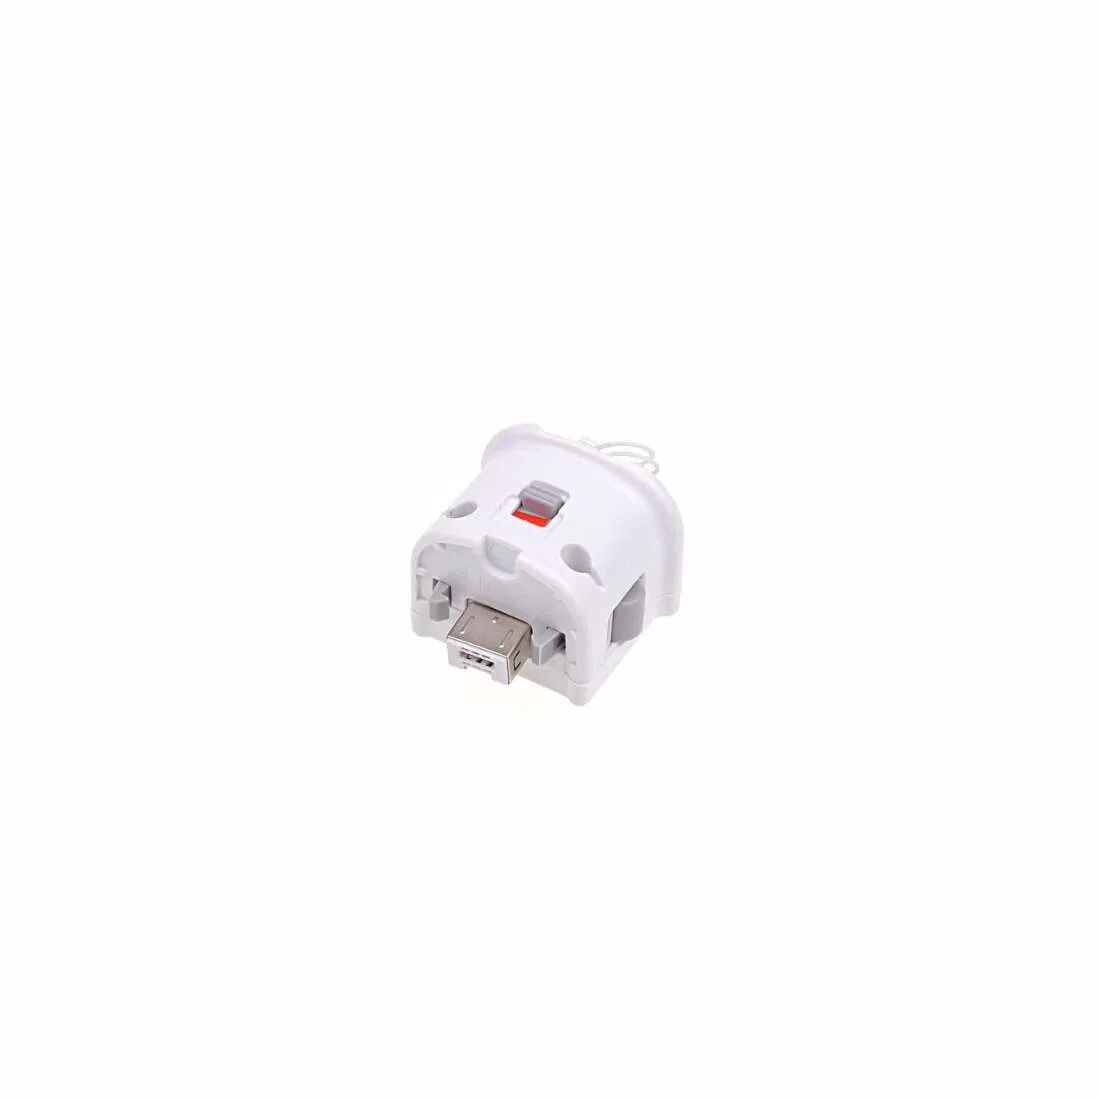 eStore Motion Plus Adapter for Nintendo Wii Remote - Hvit